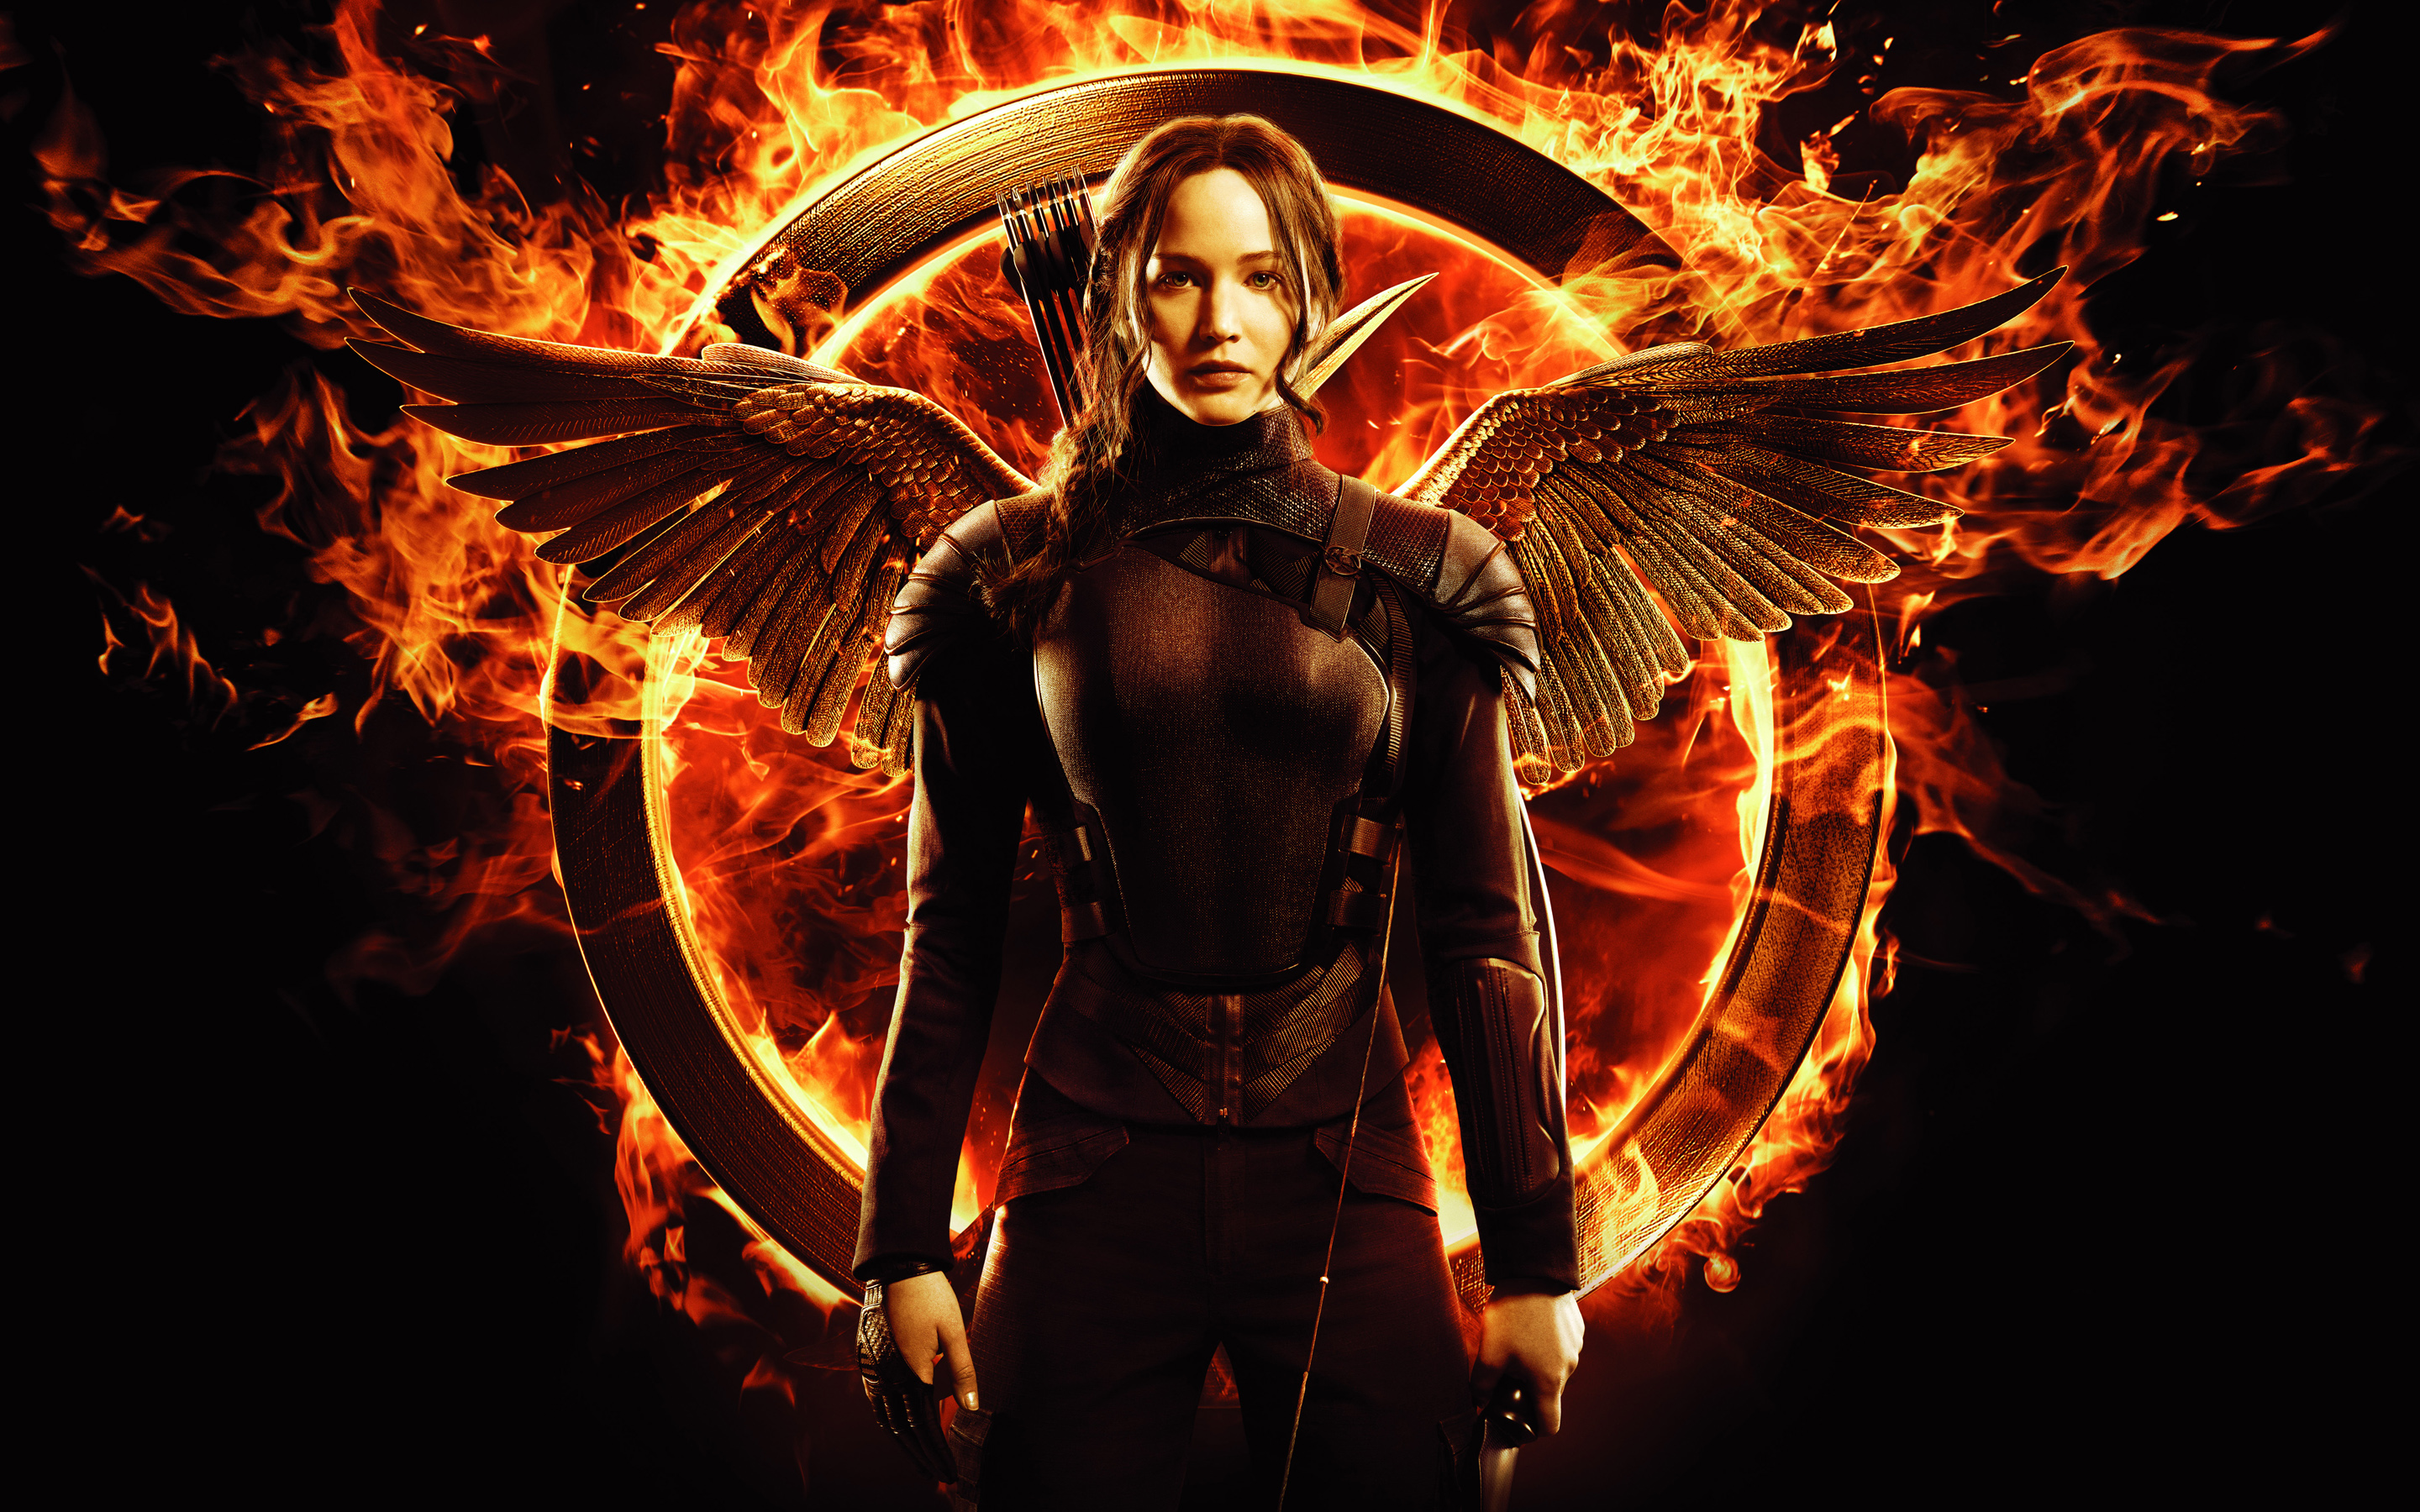 Jennifer Lawrence in Hunger Games Mockingjay